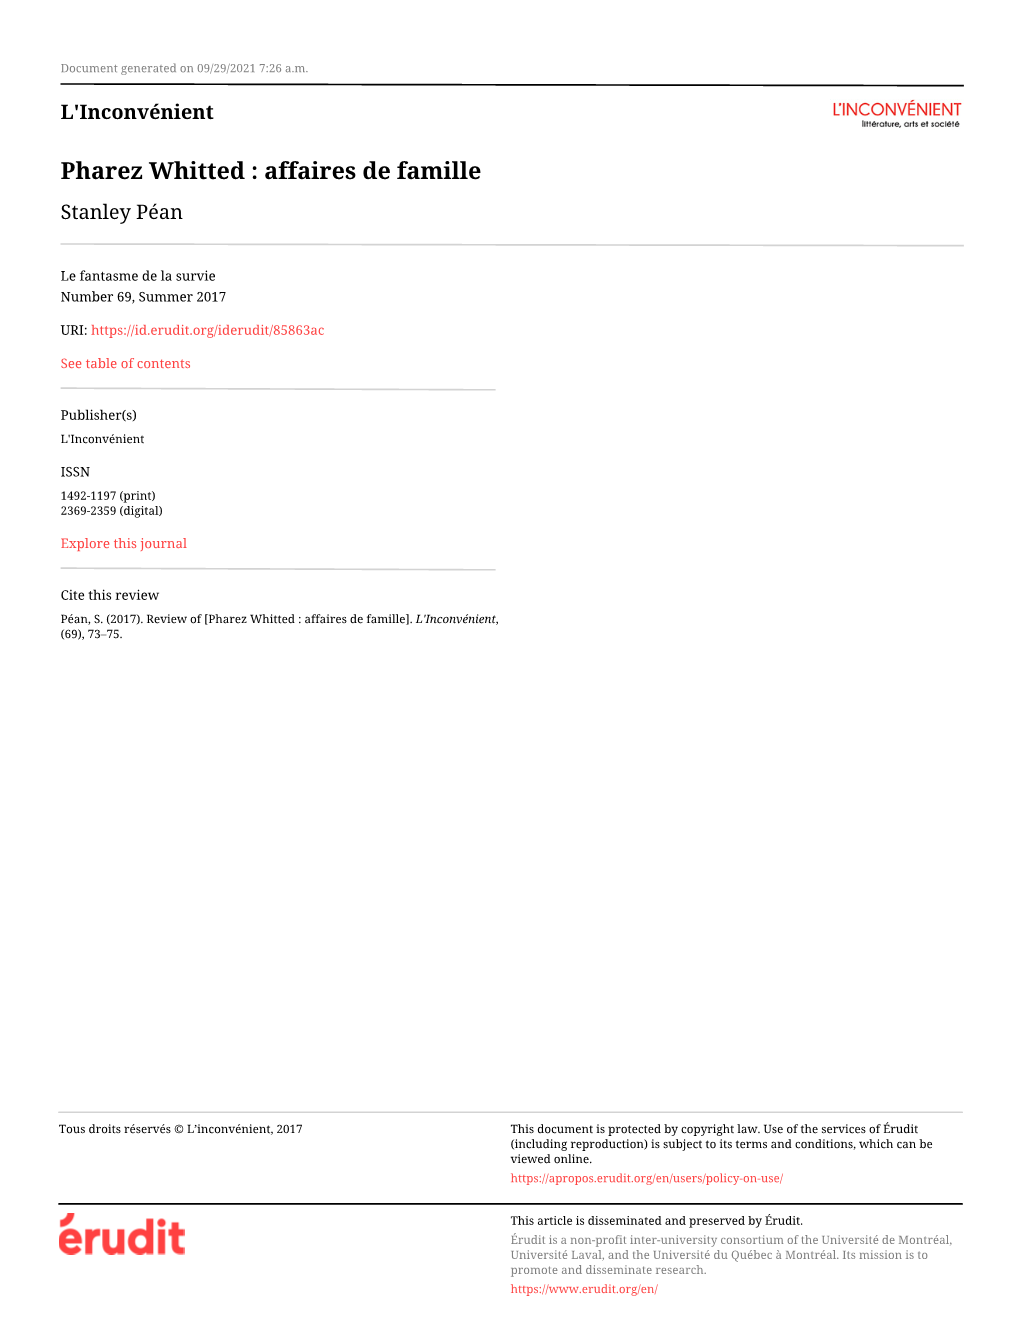 Pharez Whitted : Affaires De Famille Stanley Péan